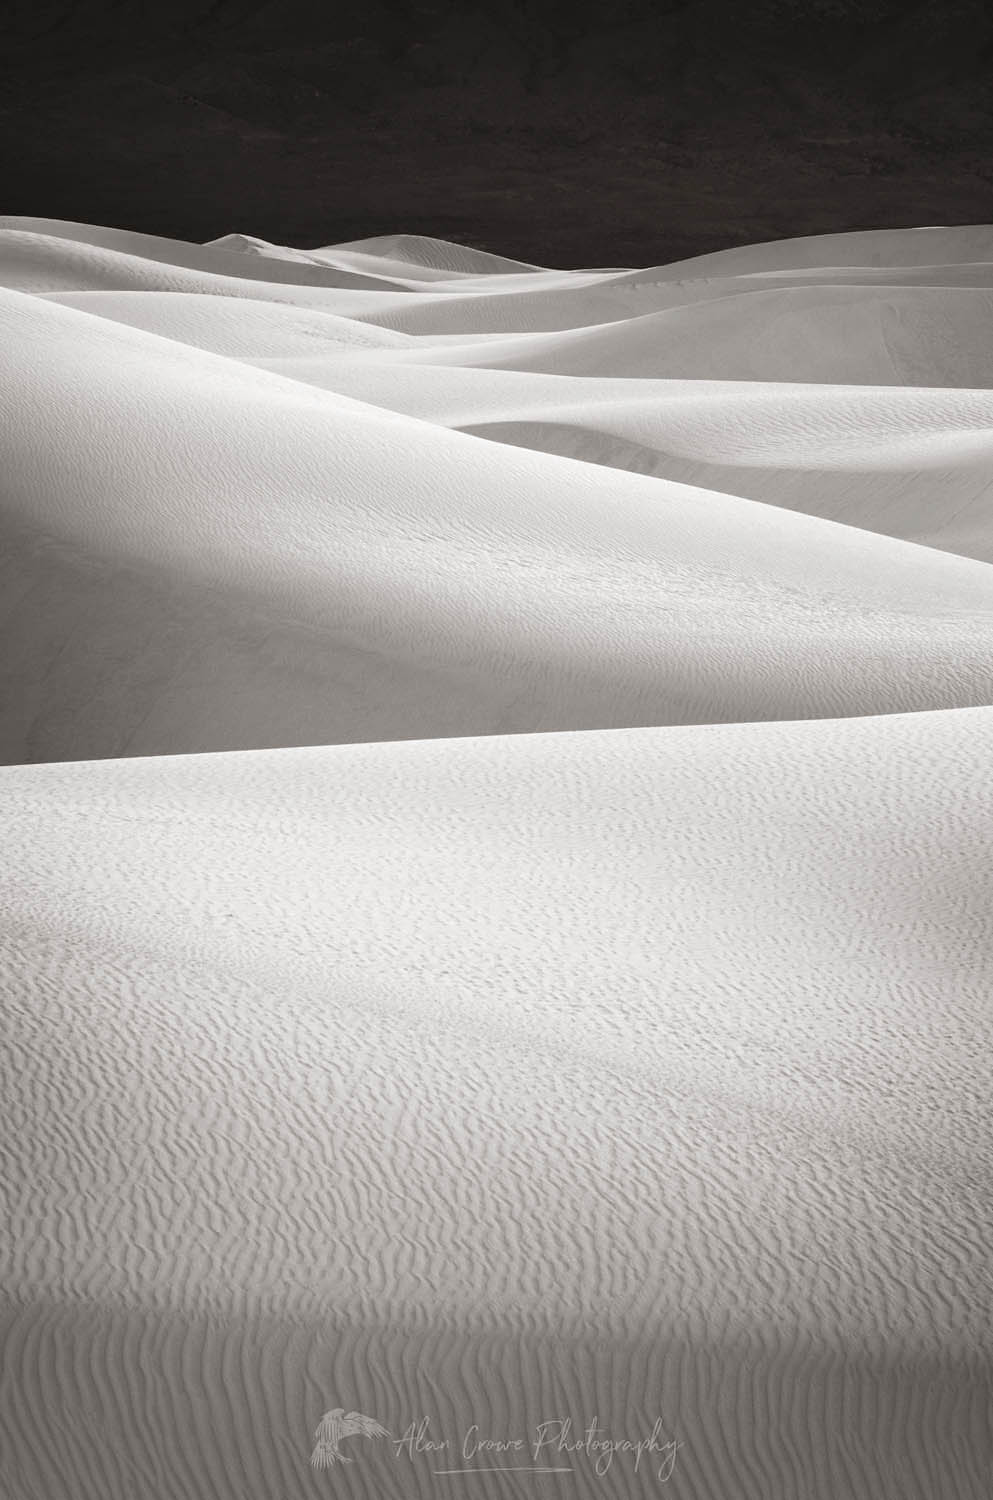 Gypsum sand dunes, White Sands National Monument Park New Mexico #57148bw